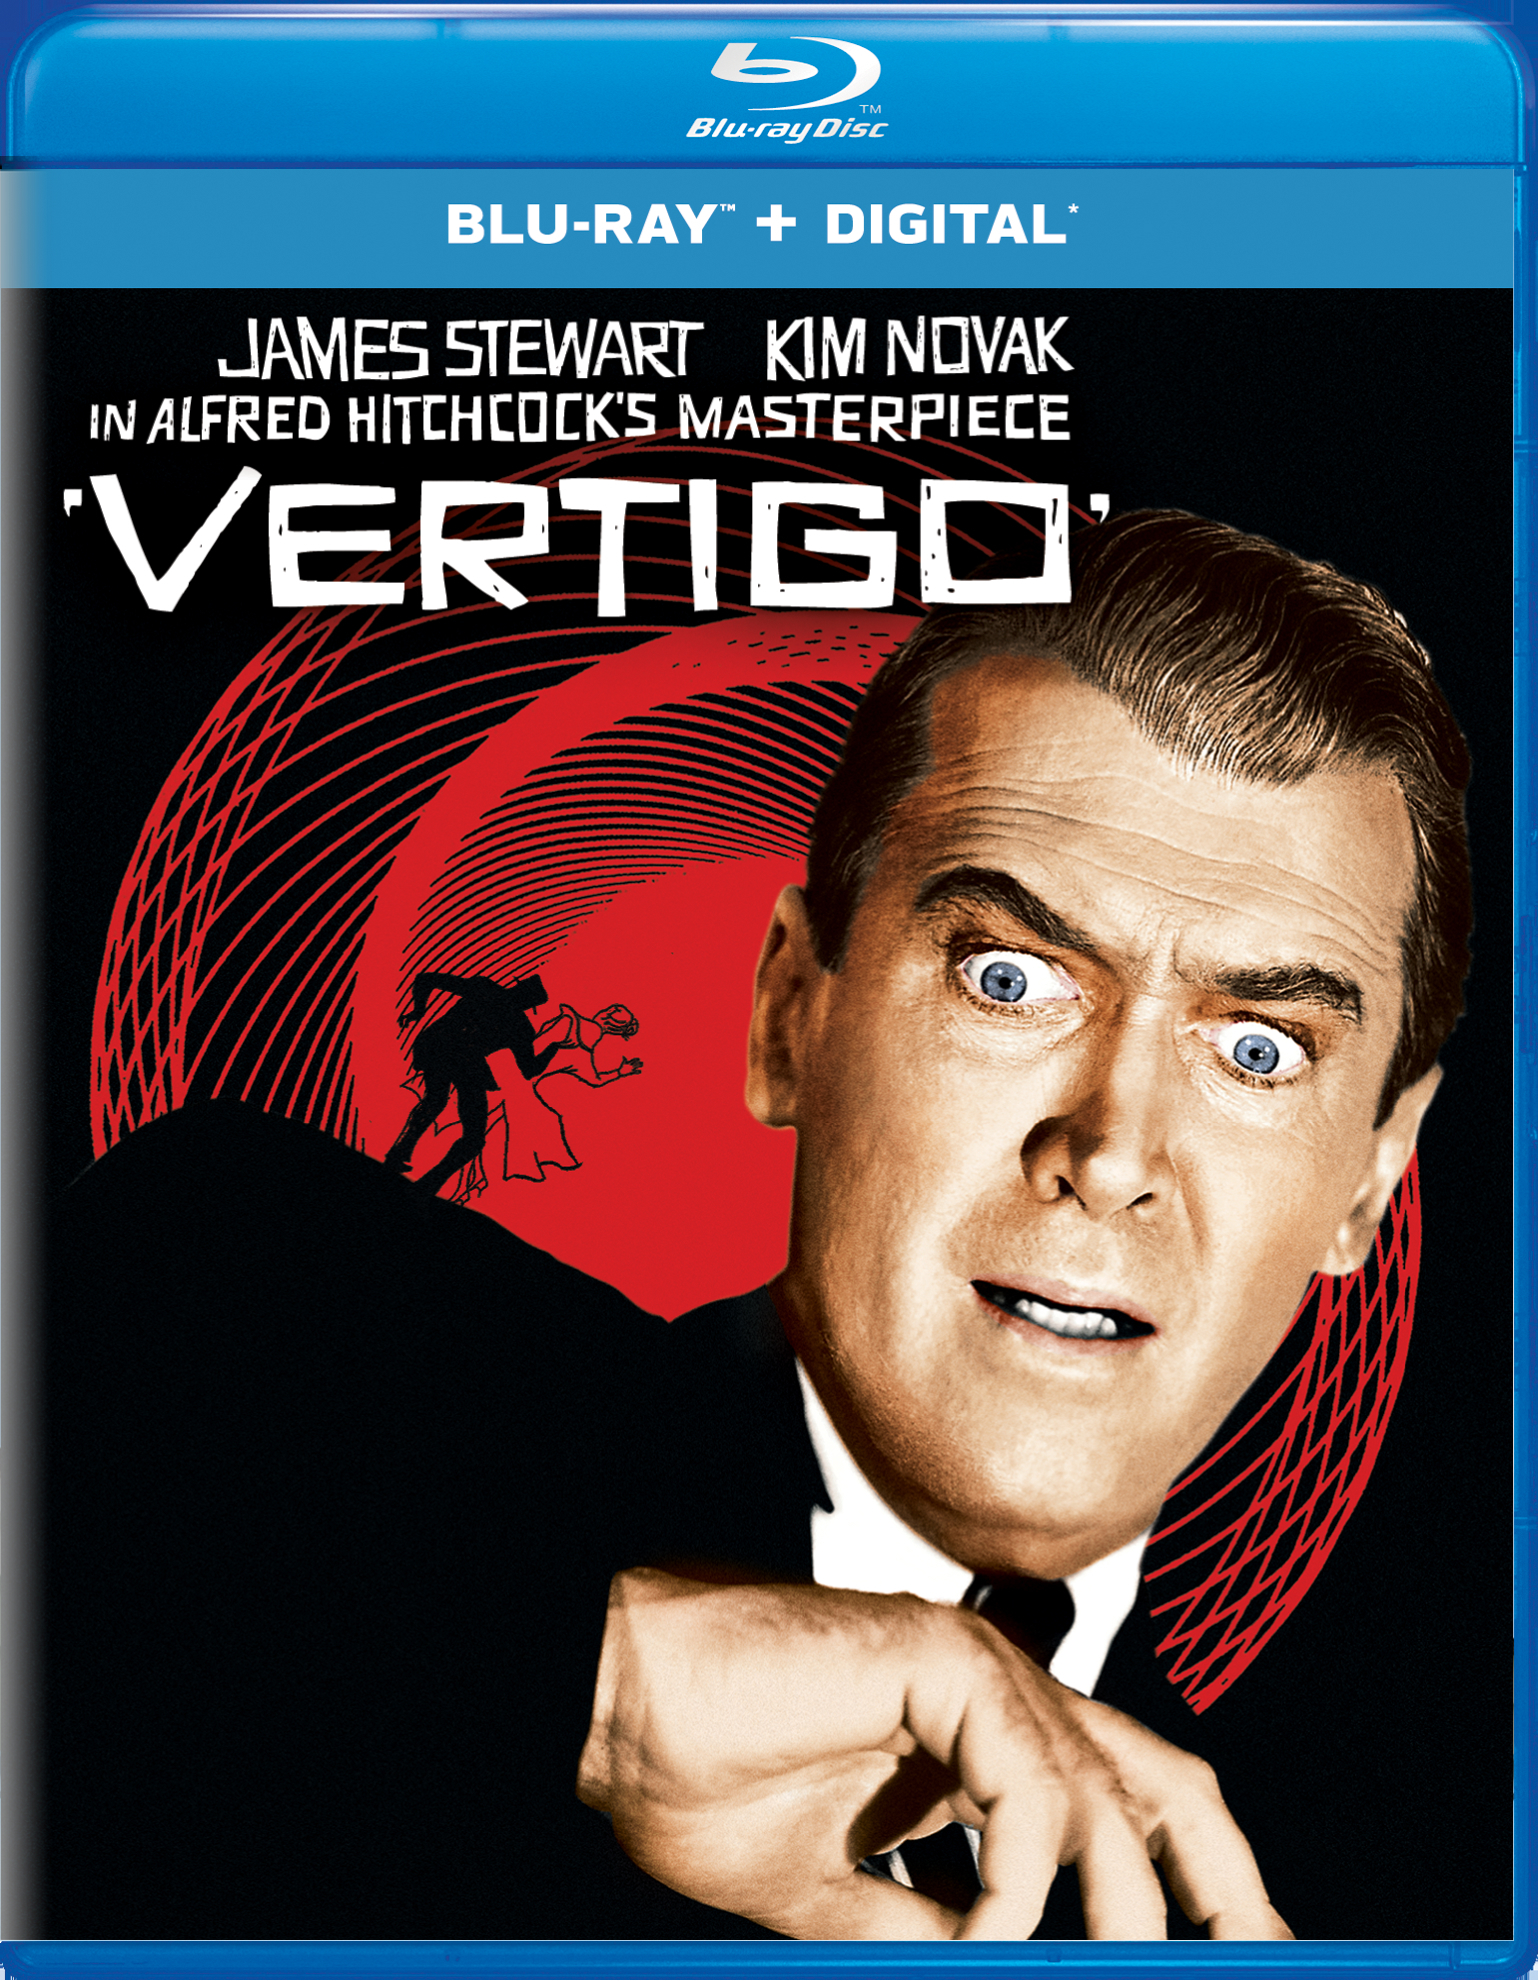 Vertigo (Blu-ray + Digital Copy) - Blu-ray [ 1958 ]  - Modern Classic Movies On Blu-ray - Movies On GRUV